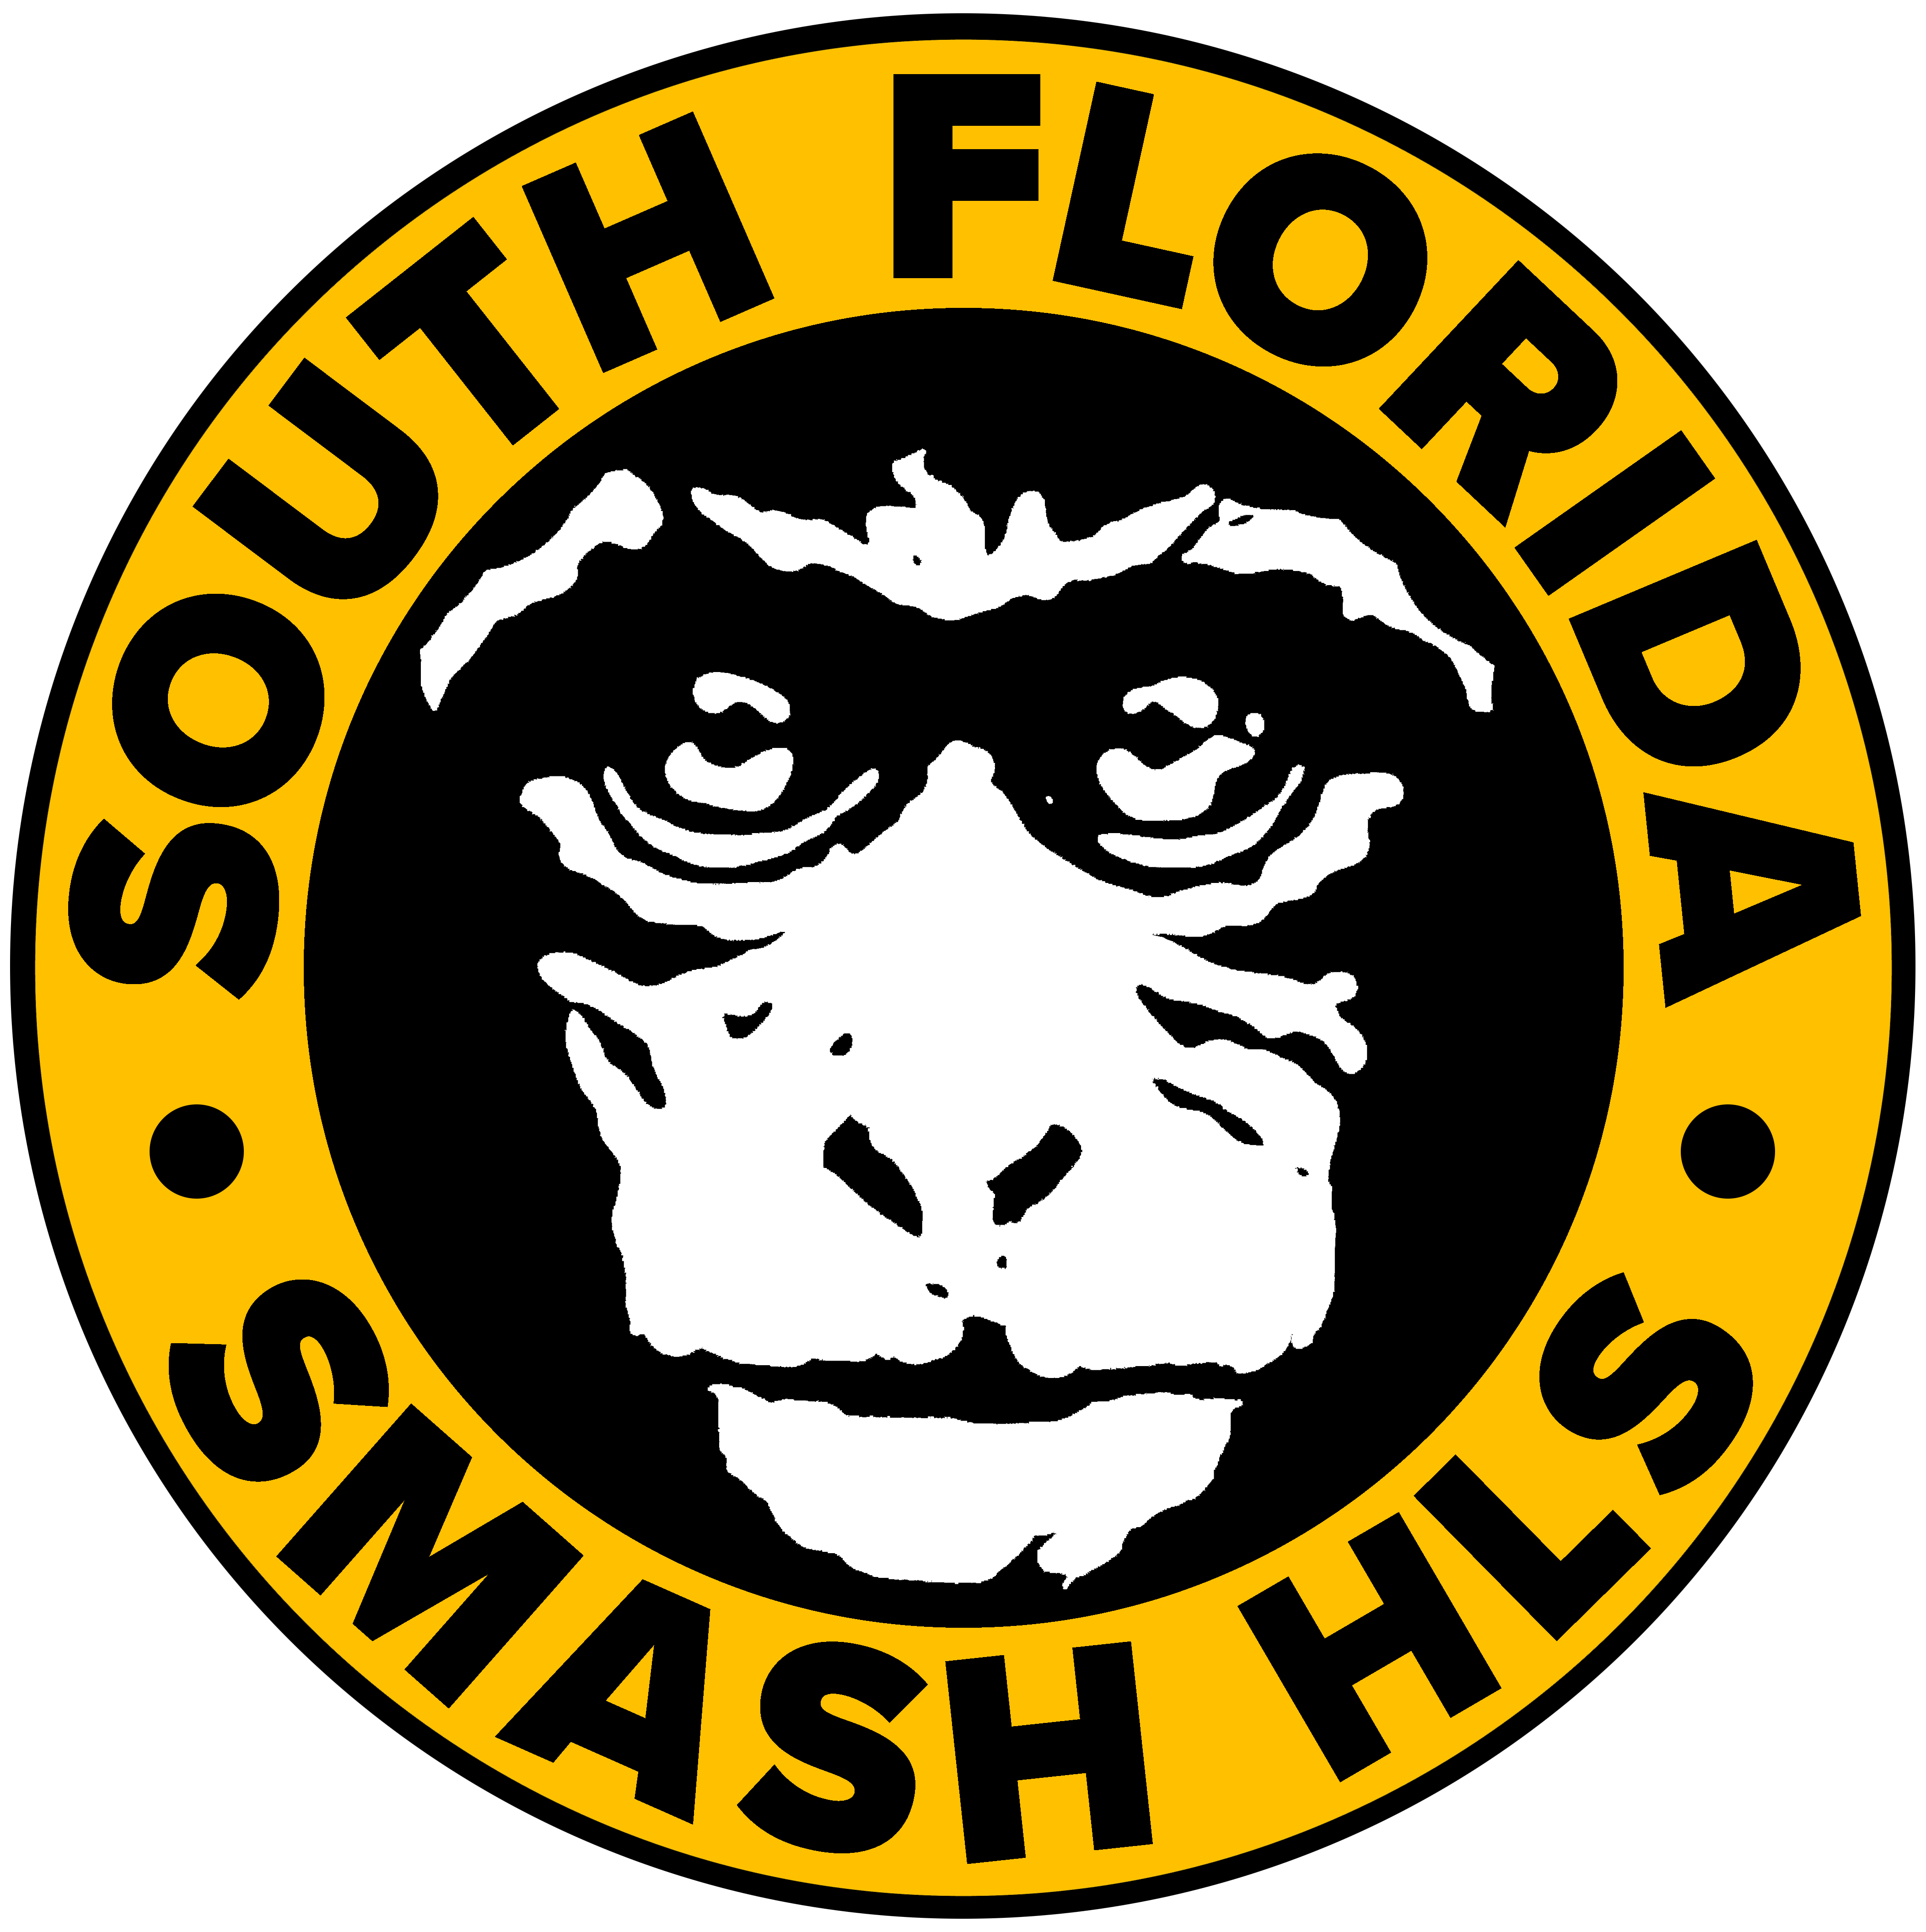 South Florida Smash HLS